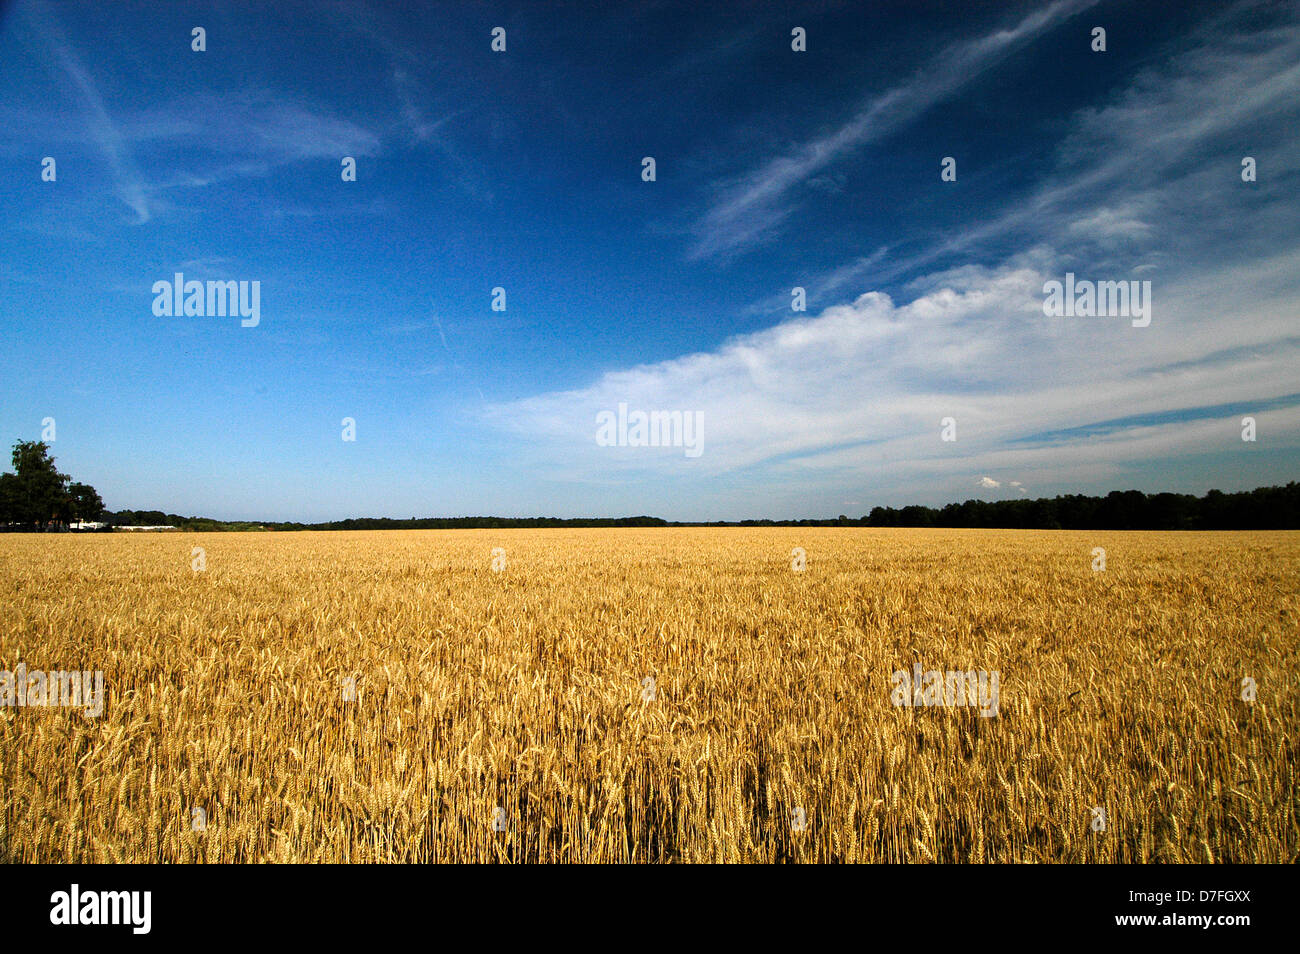 Germany, grain field, trees, skies, clouds Stock Photo